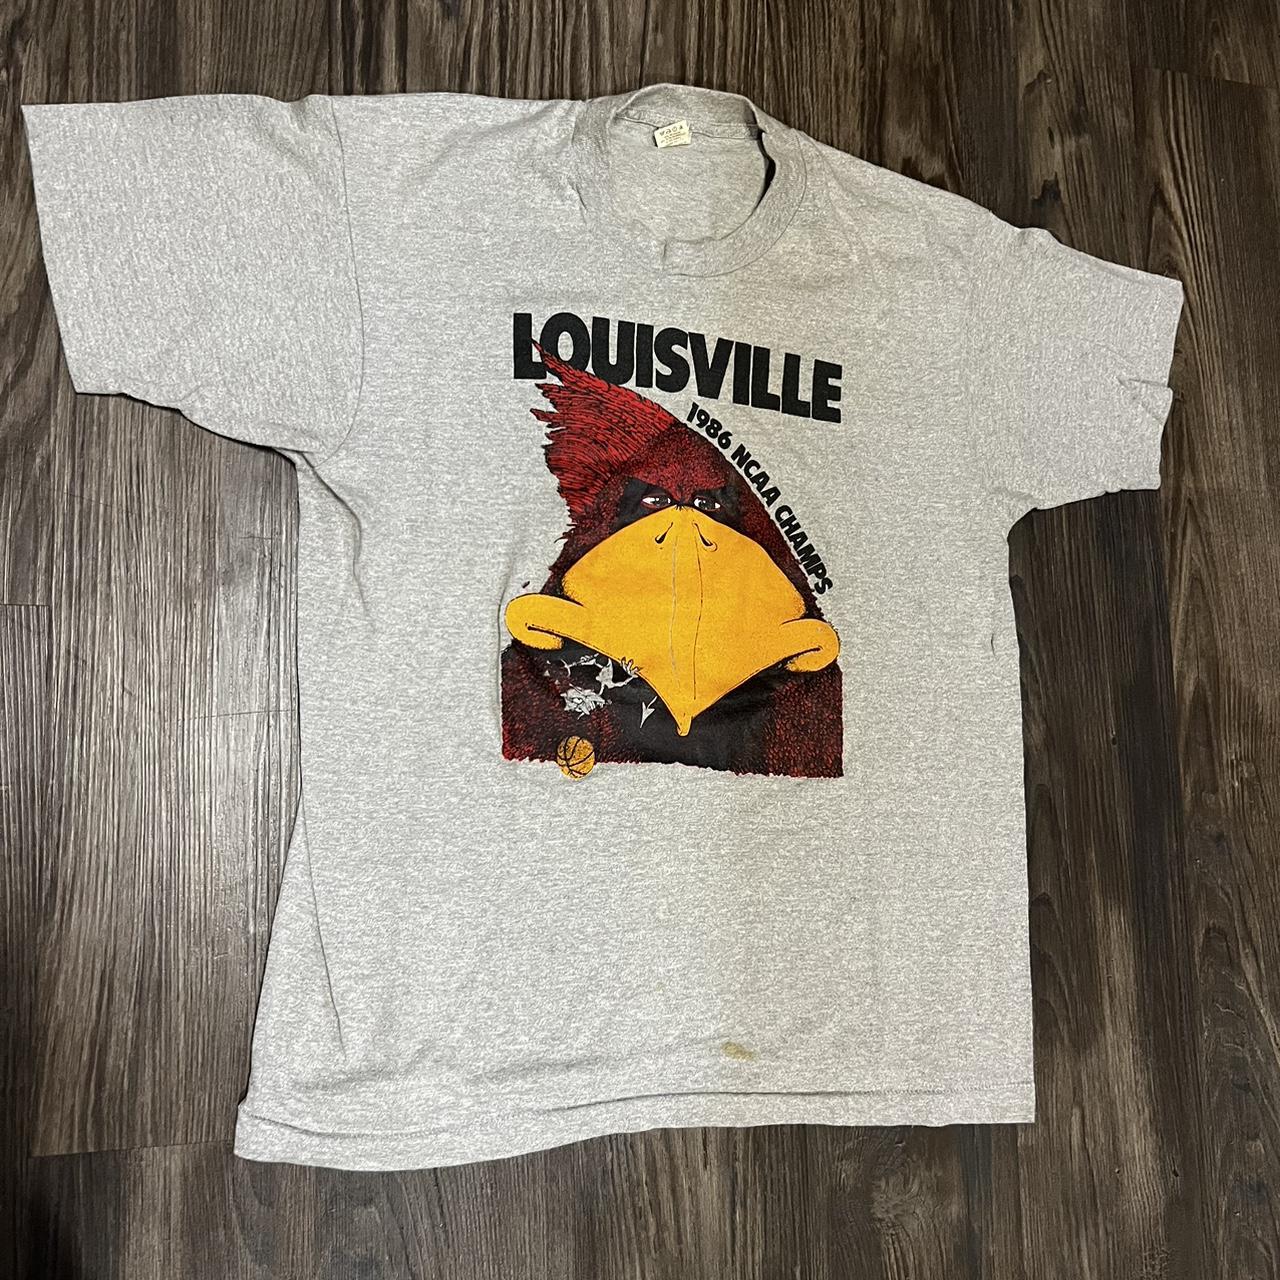 Vintage Louisville Cardinals 1986 National Champs T Shirt / 